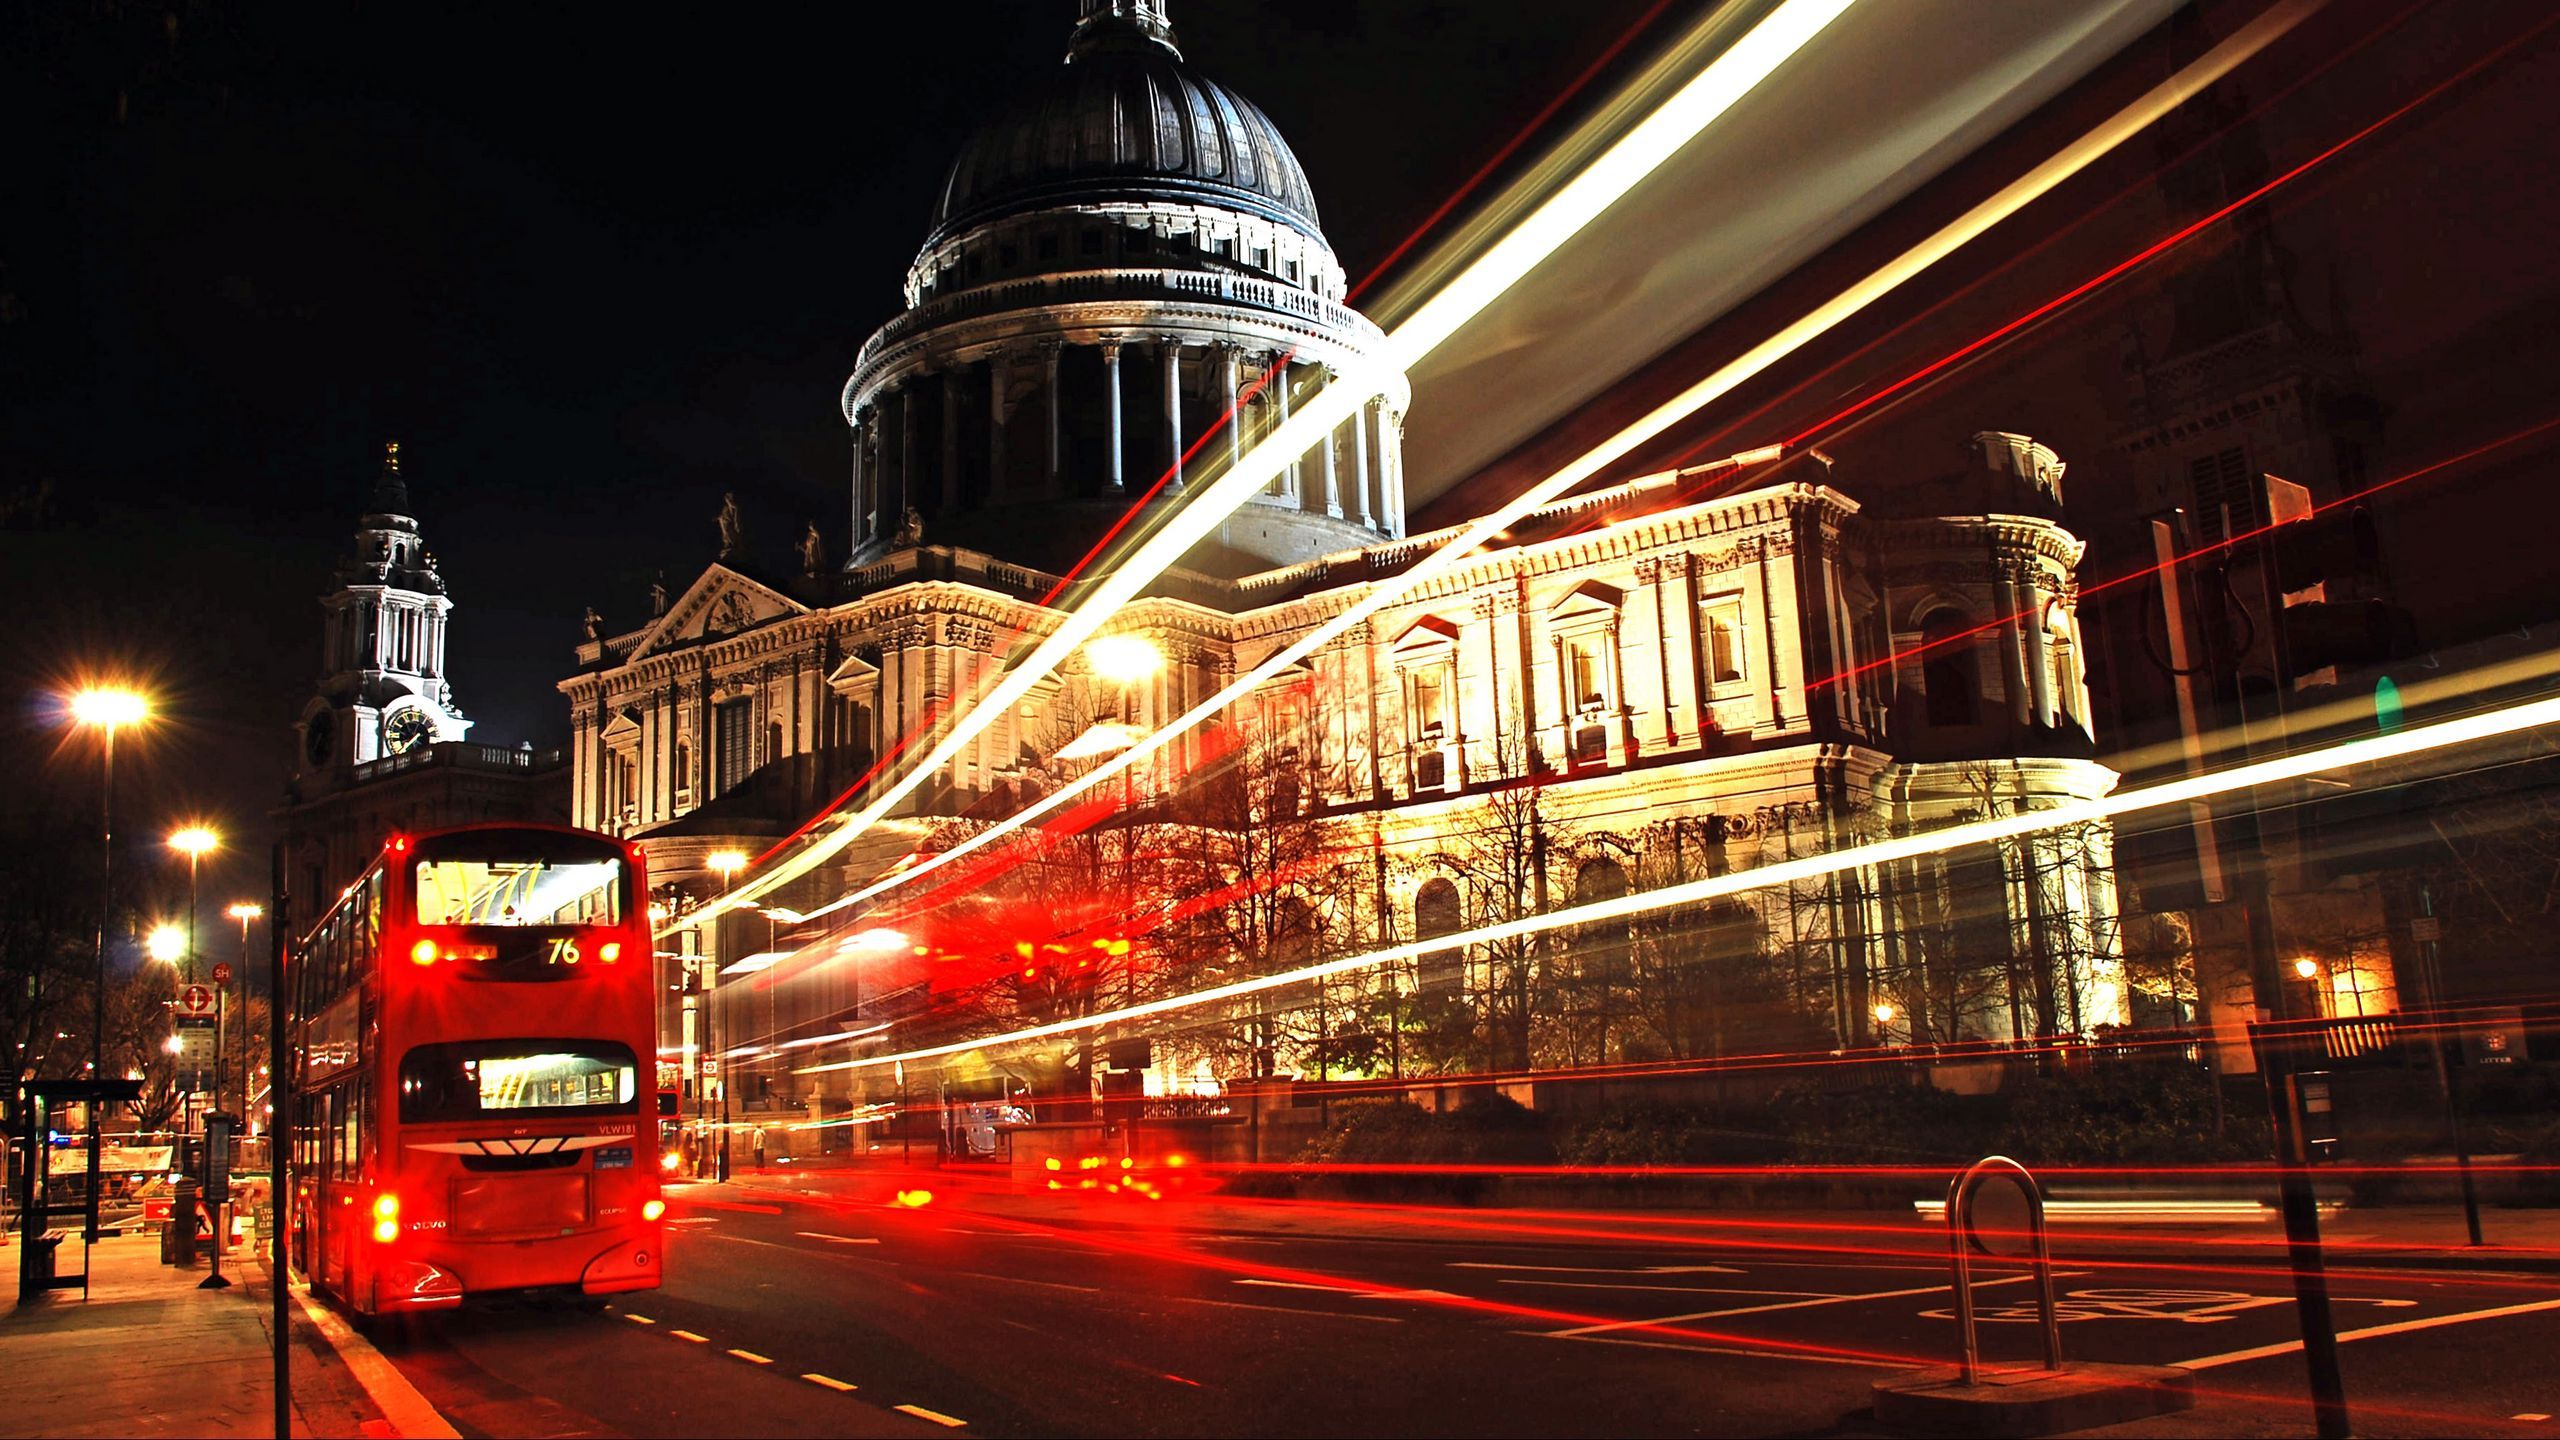 Download wallpaper 2560x1440 london, city, bus, night widescreen